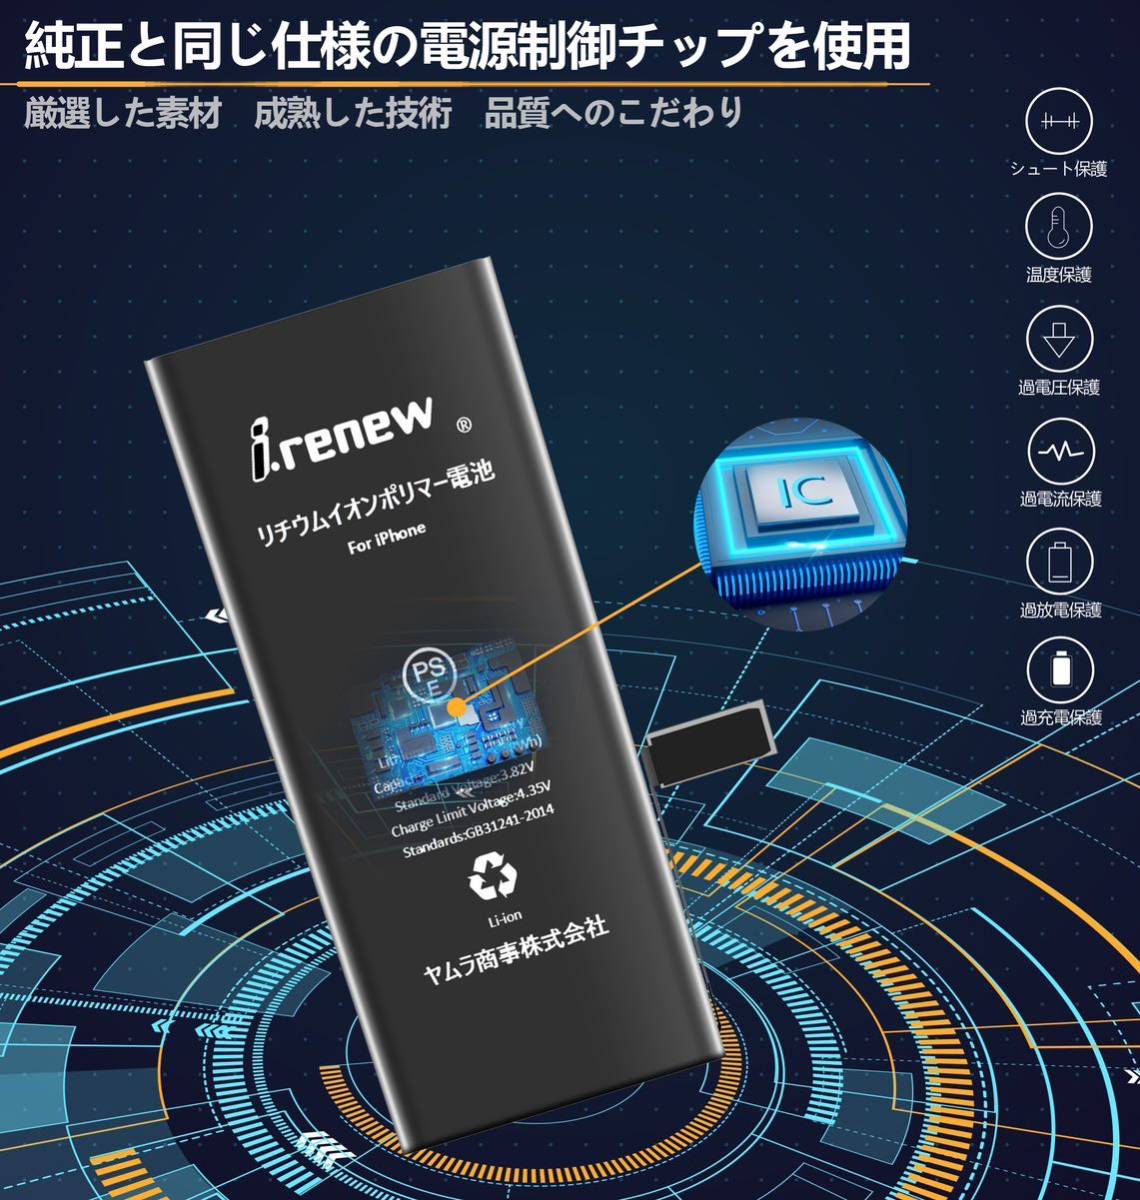 【新品】iPhone6 大容量バッテリー 交換用 PSE認証済 工具・保証付